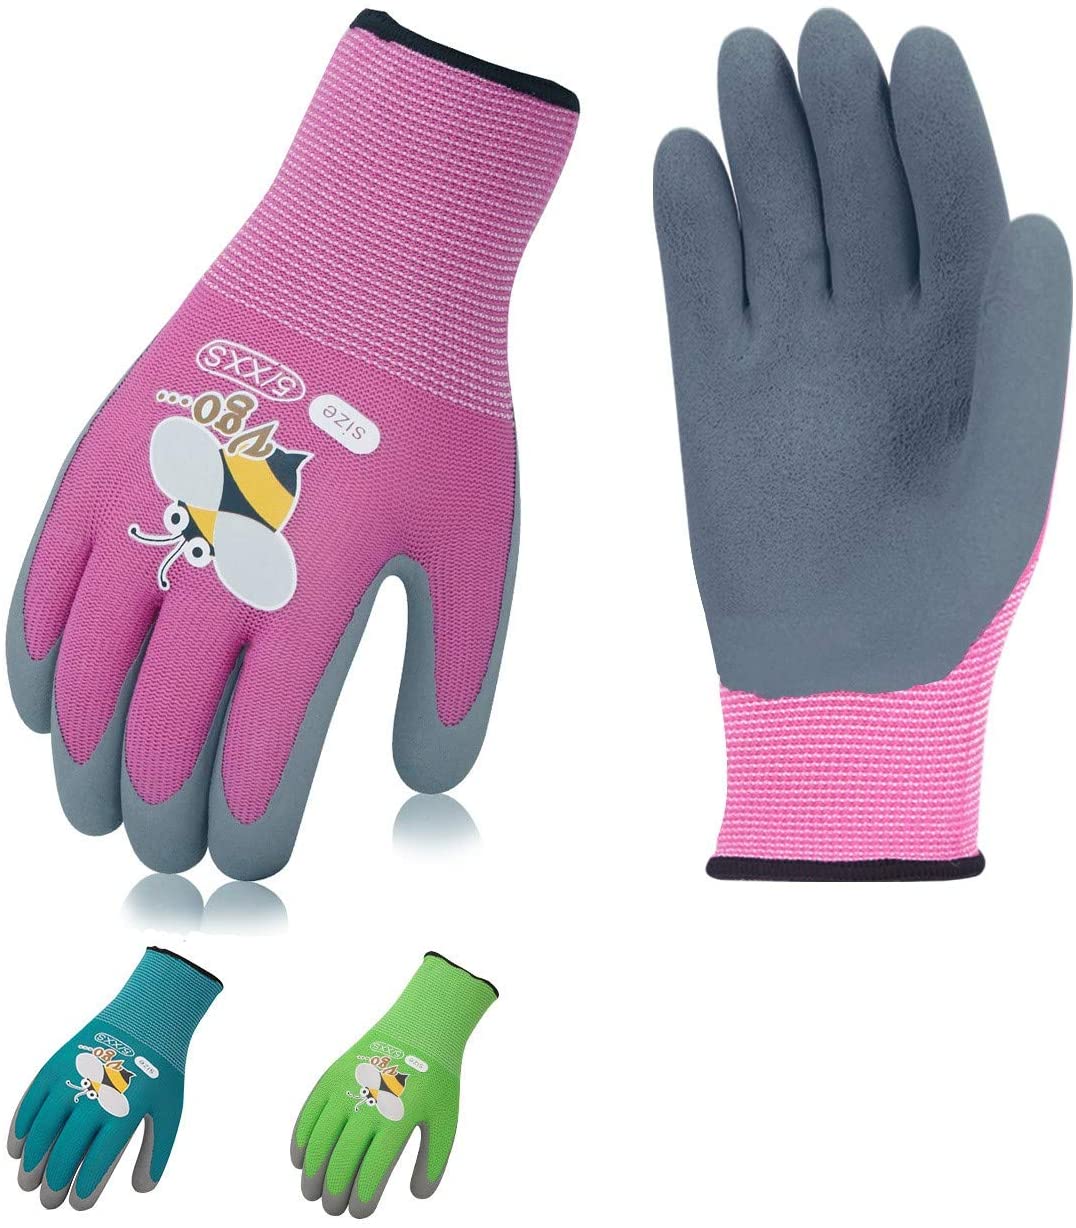 Vgo Foam Rubber Coated Gardening Glove For Kids